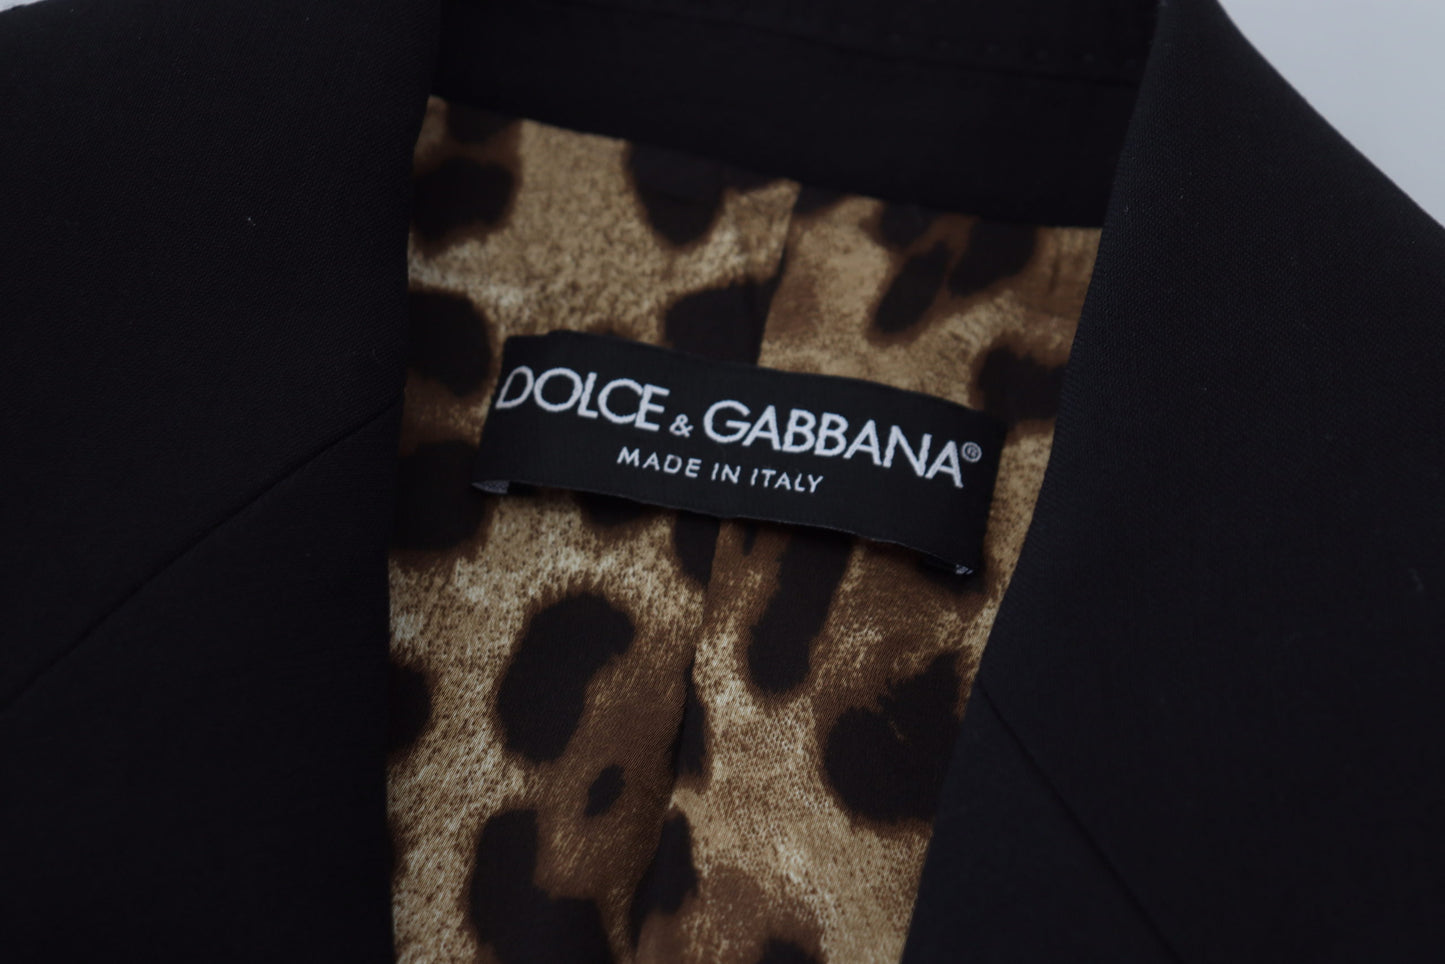 Dolce & Gabbana Elegant Black Stretch Wool Blazer